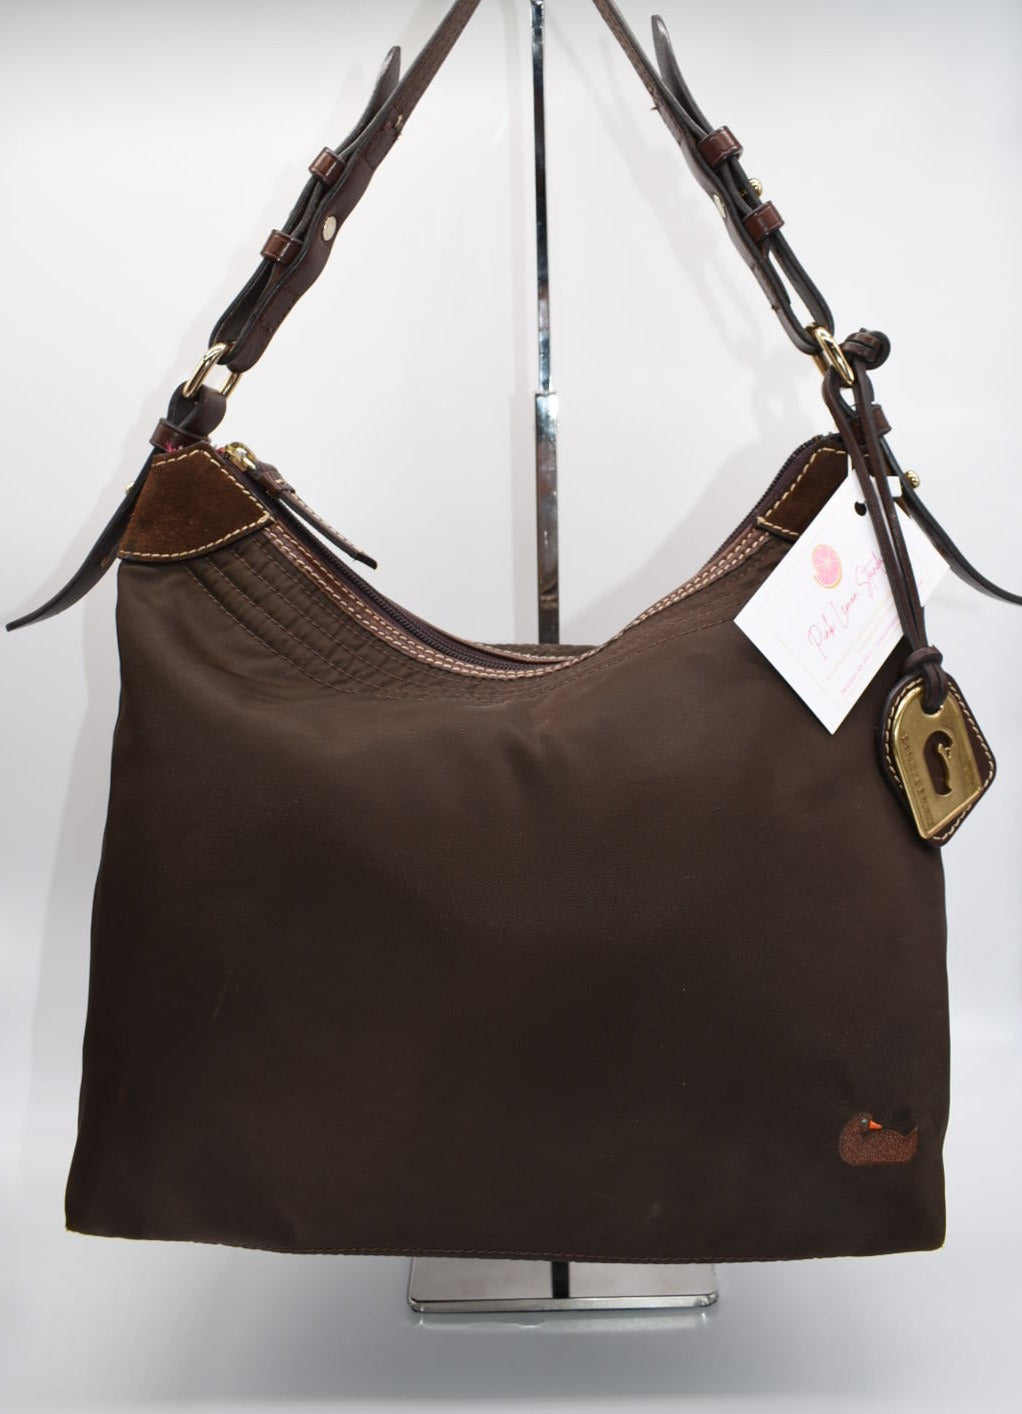 Dooney & Bourke Large Erica Shoulder Bag in Brown